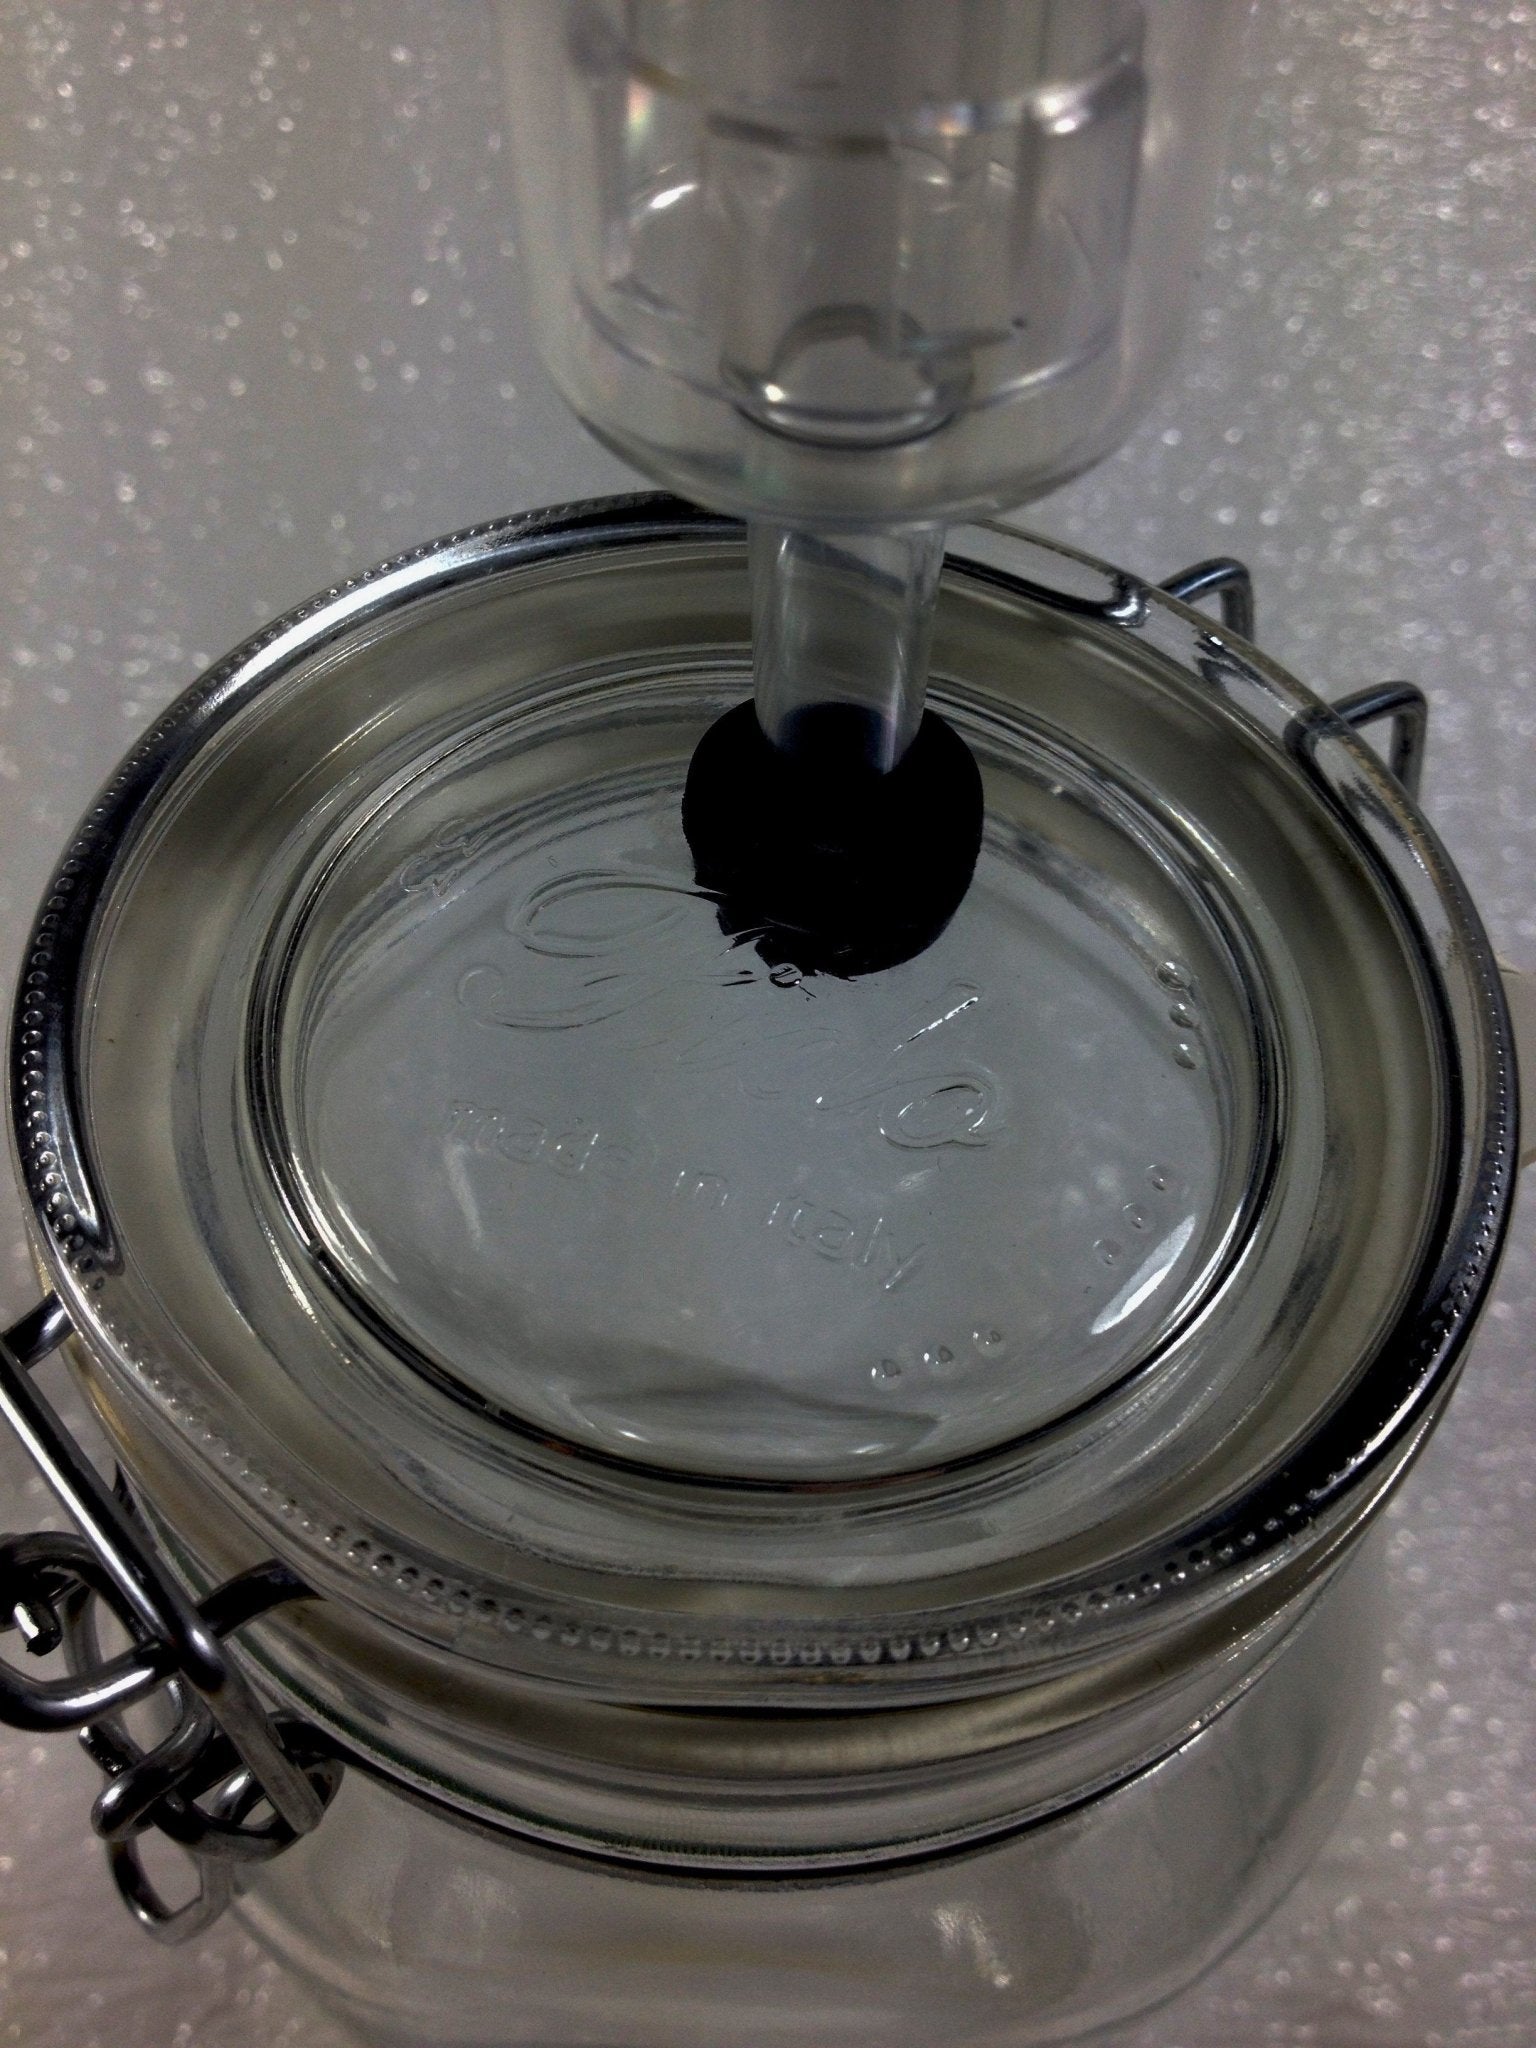 500ml Le Parfait Fermenting Jar With Fermenting Lid BPA Free - Ball Mason Australia